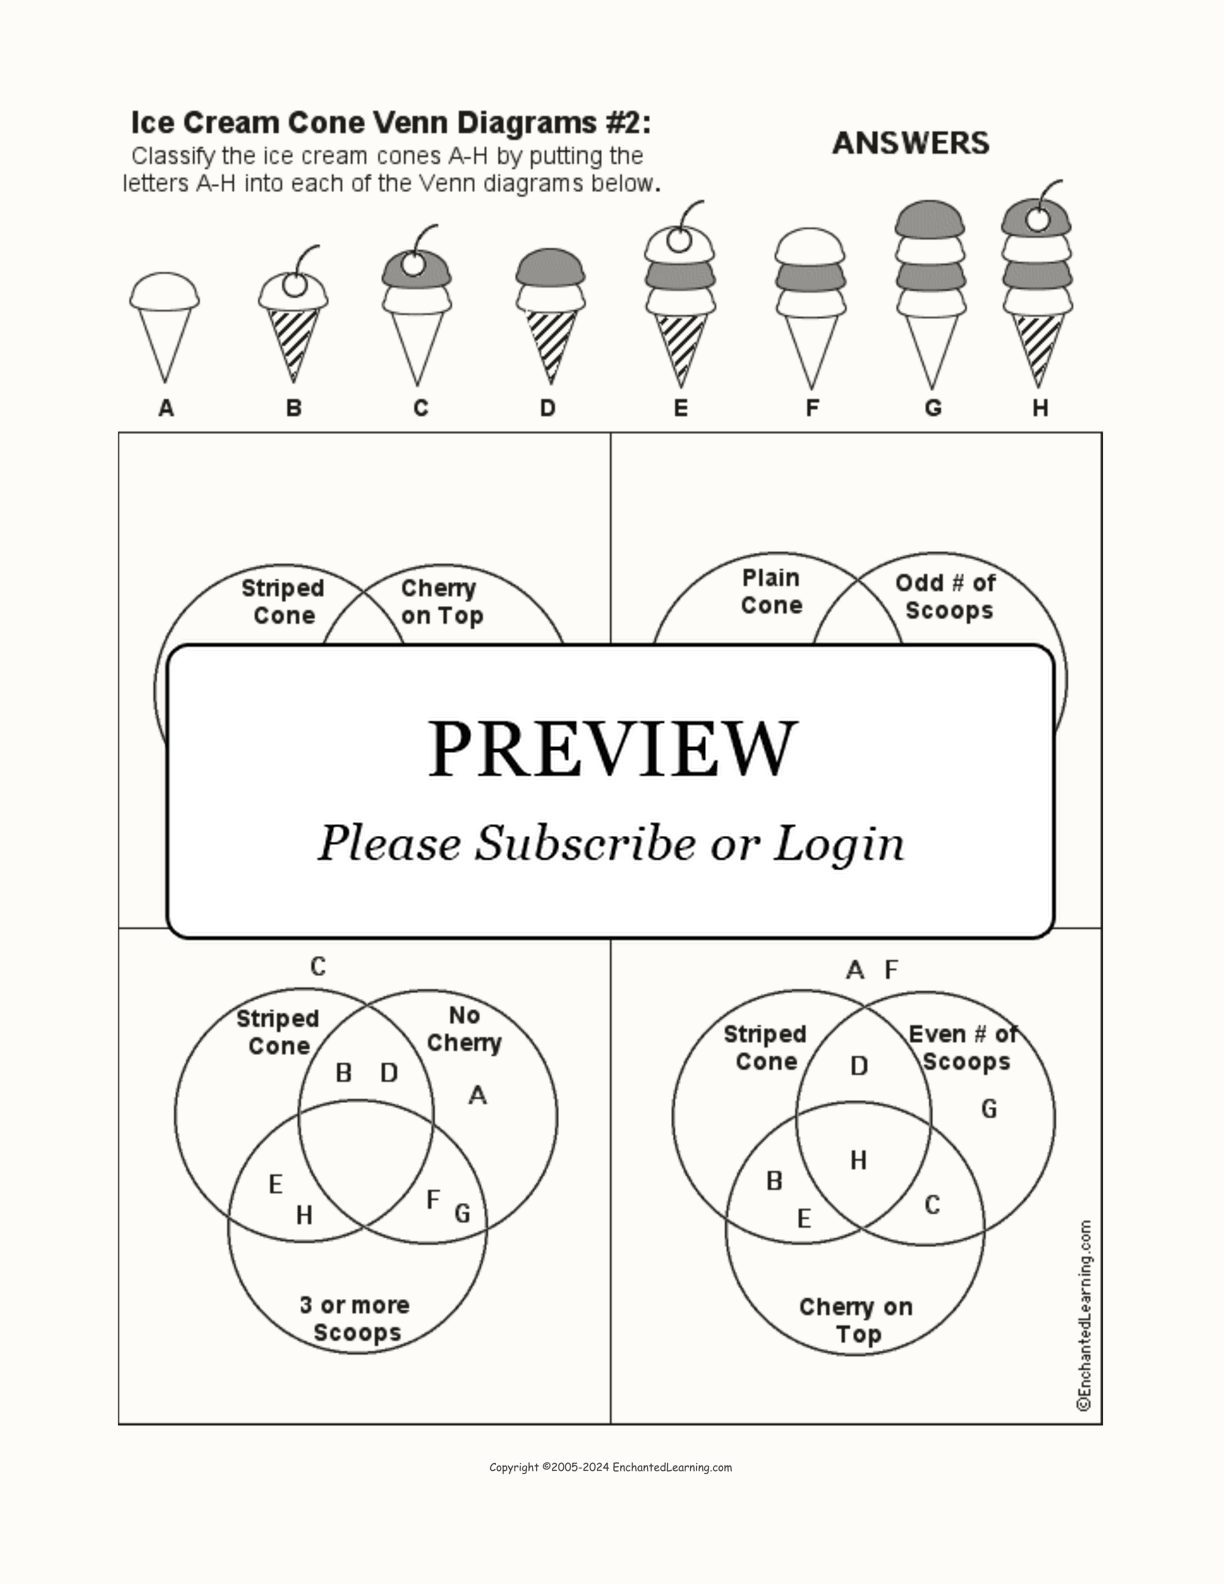 Ice Cream Cone Venn Diagram #2 interactive worksheet page 2